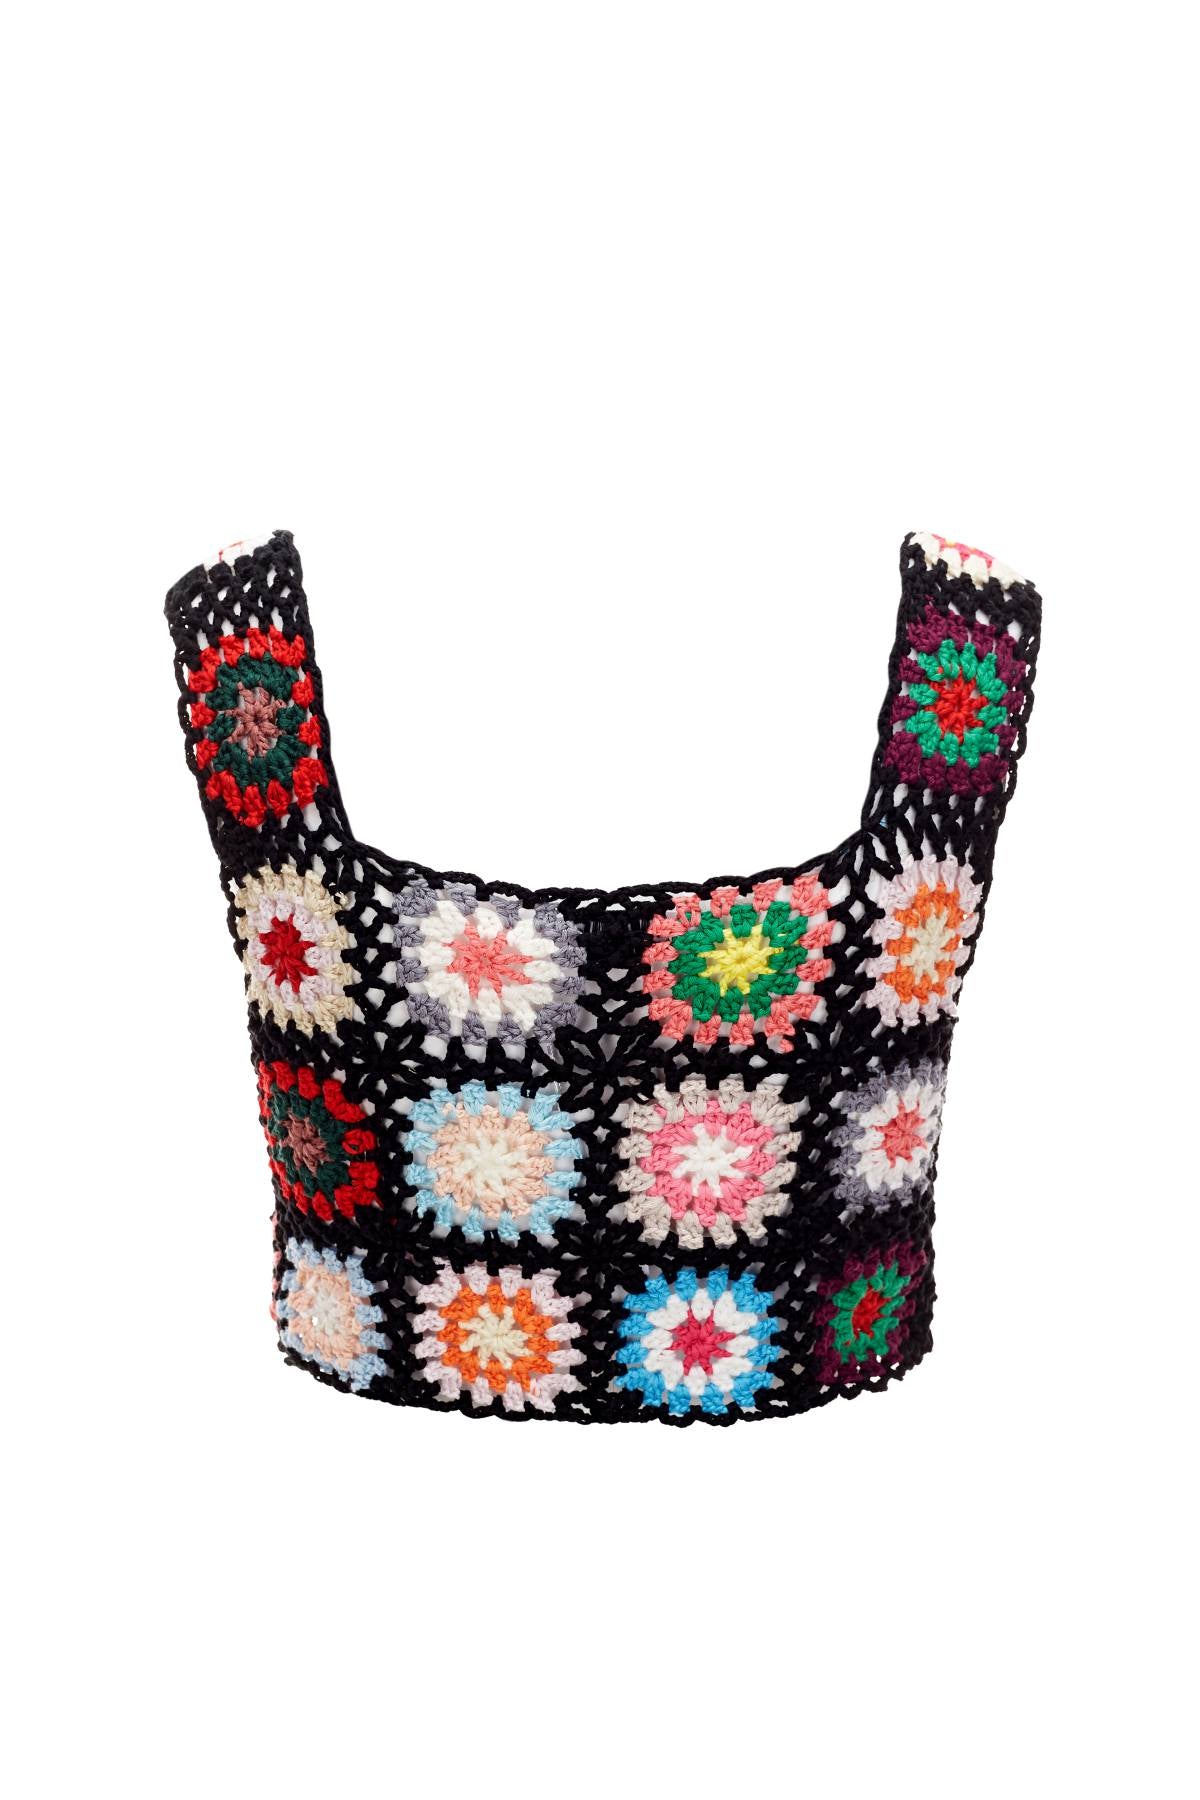 UUNIQ WEEKEND MARKET Floral Plaid Knit Crochet Top